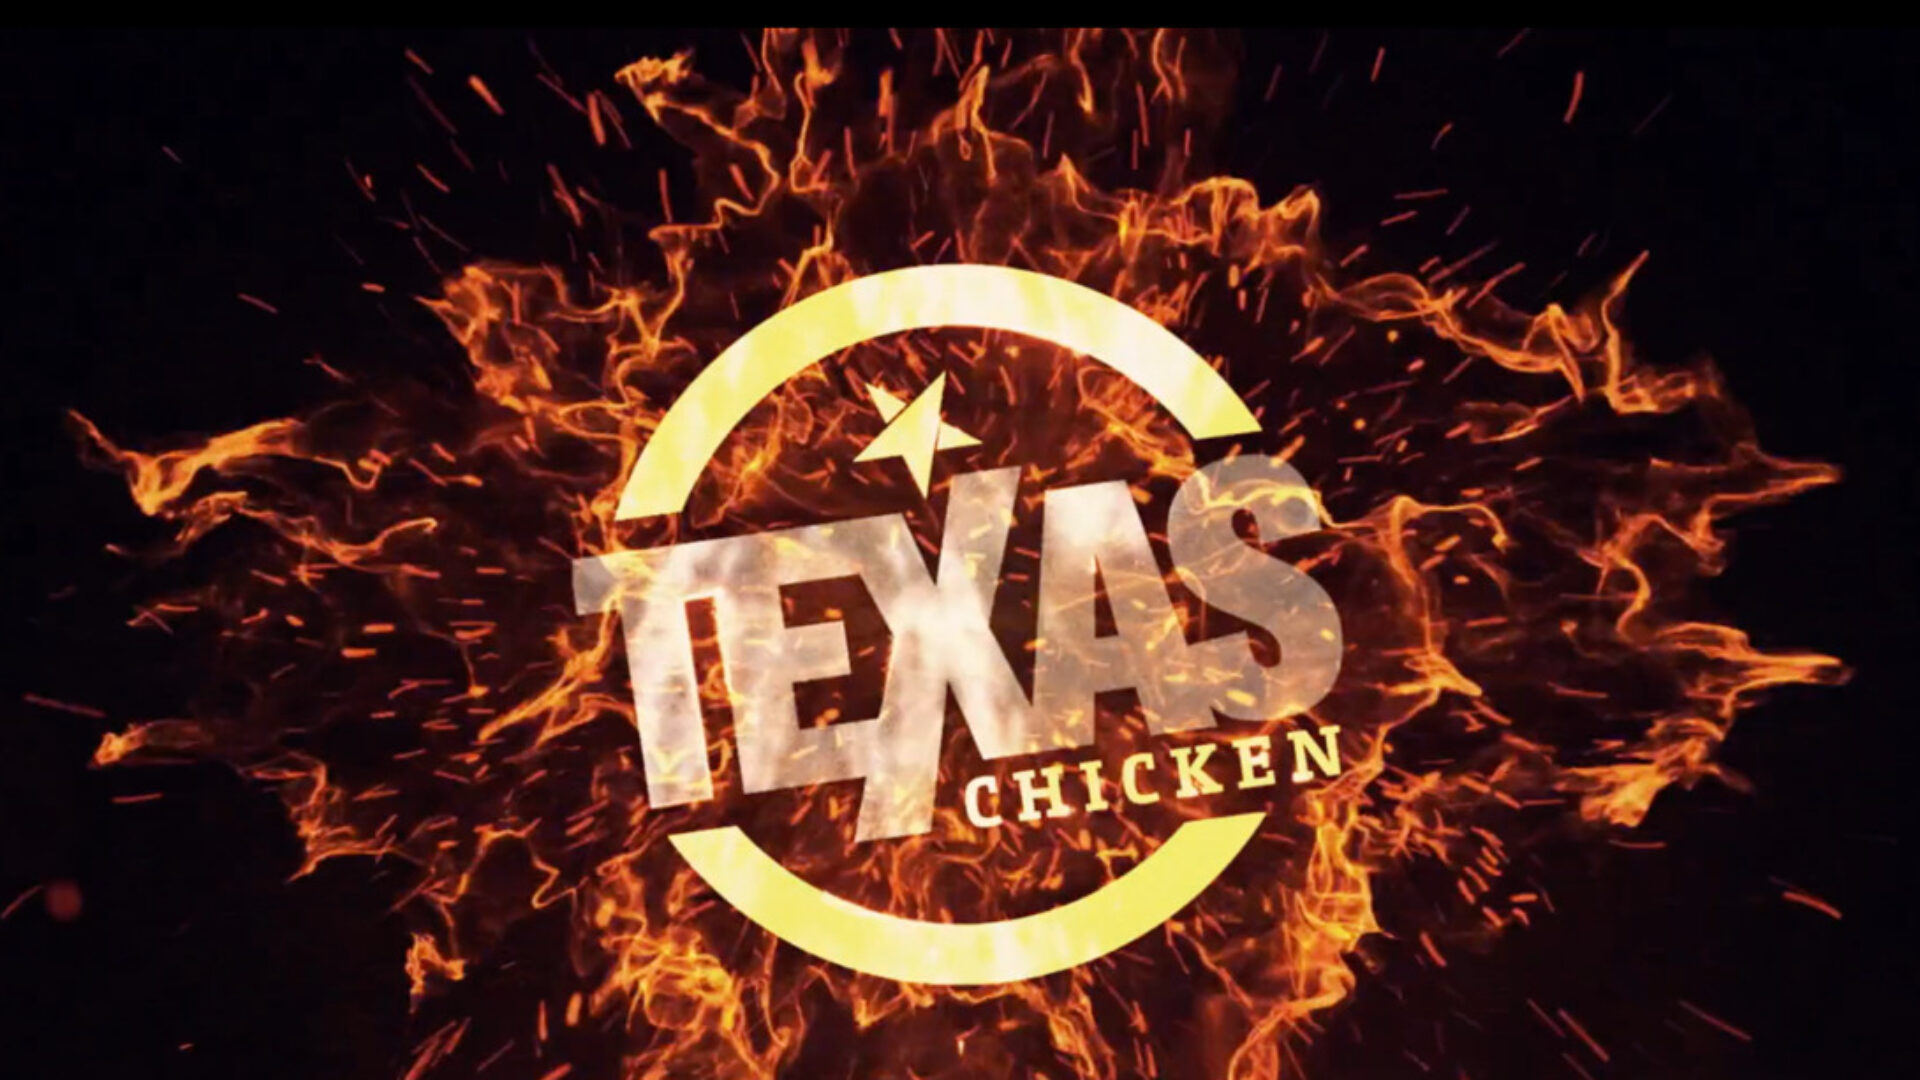 Church’s & Texas Chicken